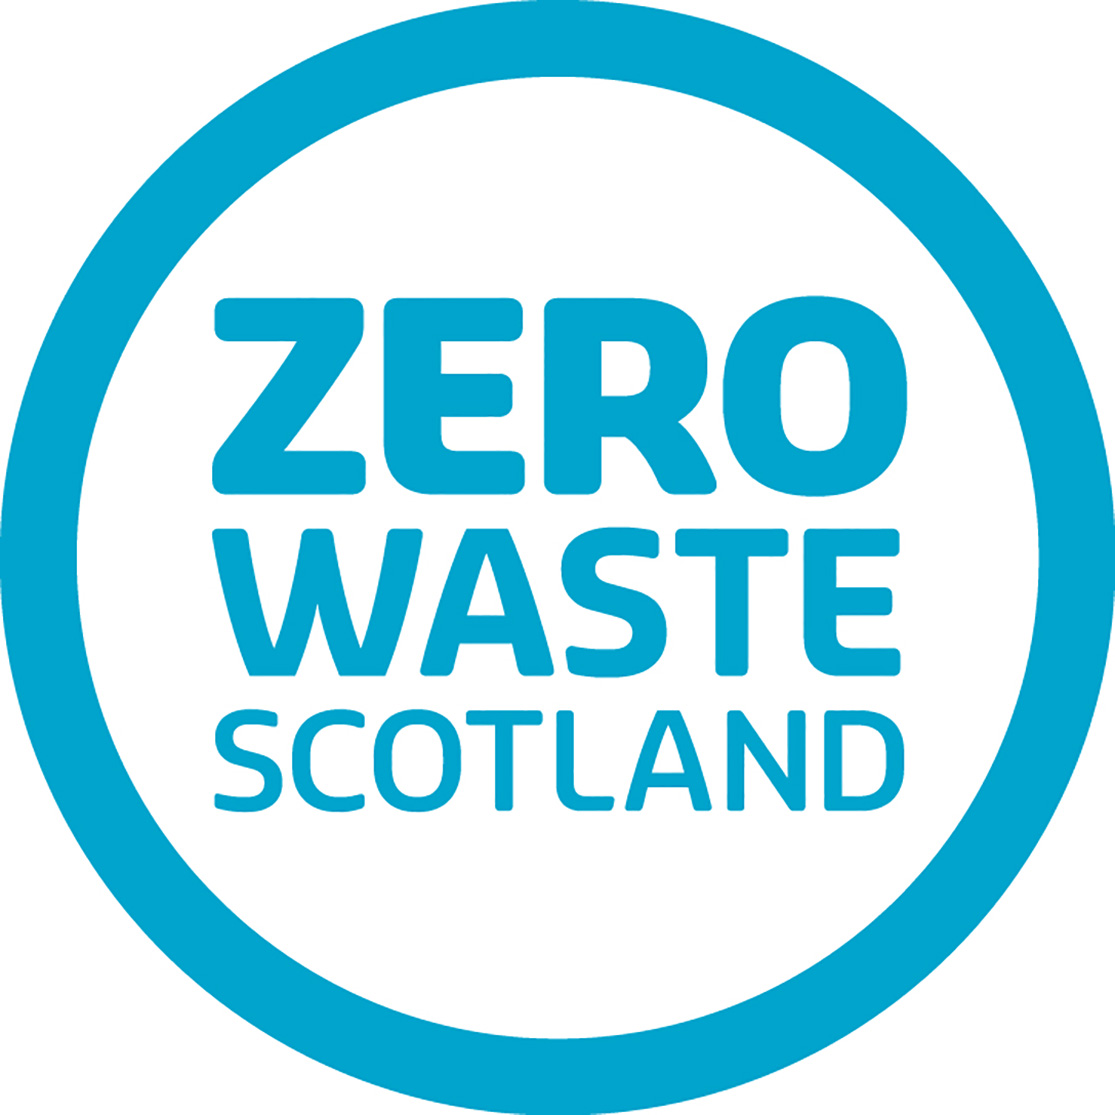 Linked logo for Zero Waste Scotland